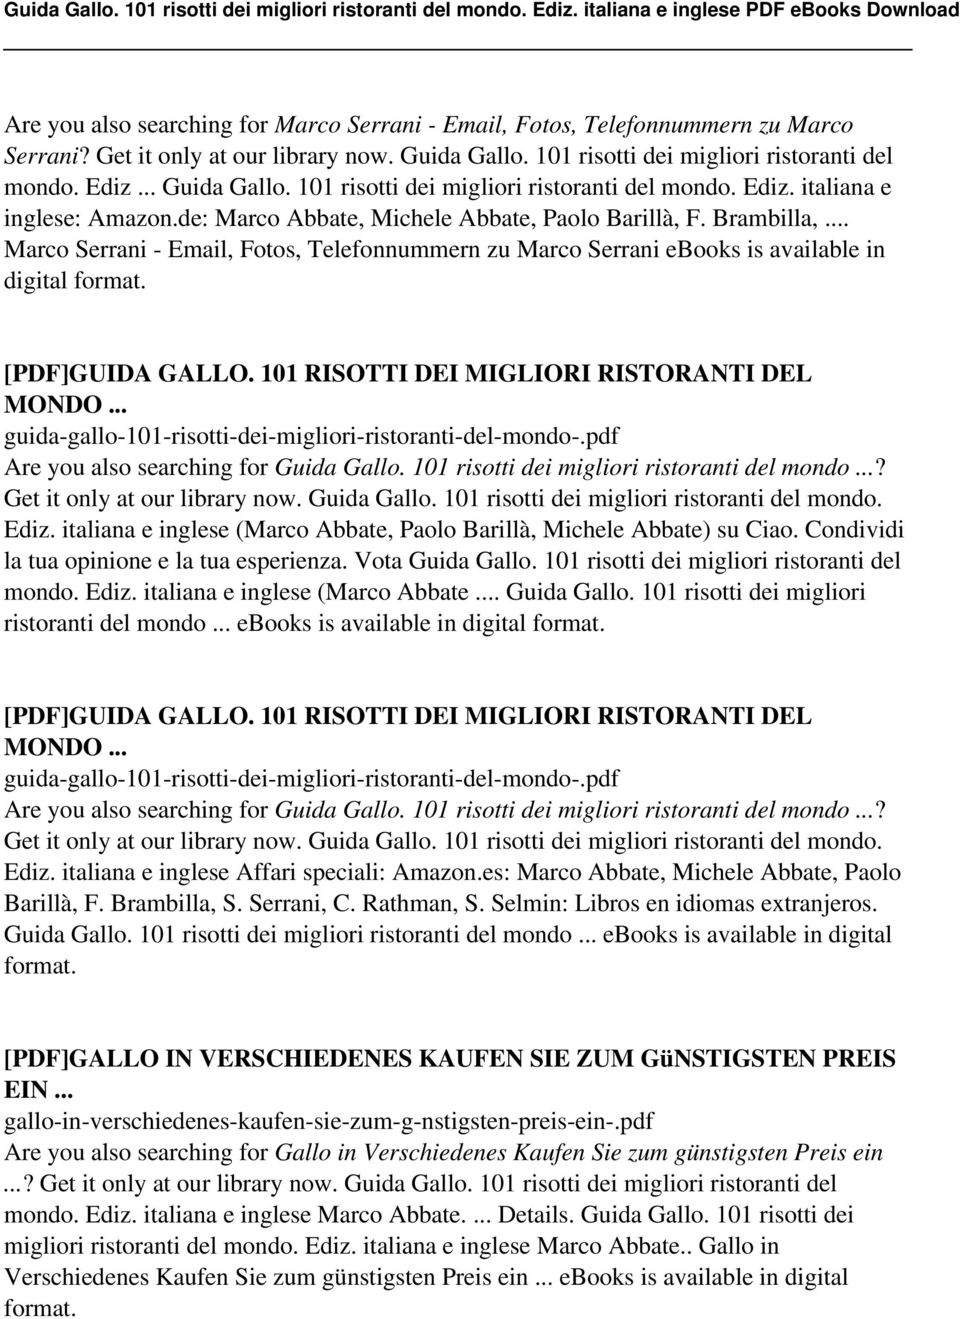 .. Marco Serrani - Email, Fotos, Telefonnummern zu Marco Serrani ebooks is available in digital format. Ediz. italiana e inglese (Marco Abbate, Paolo Barillà, Michele Abbate) su Ciao.